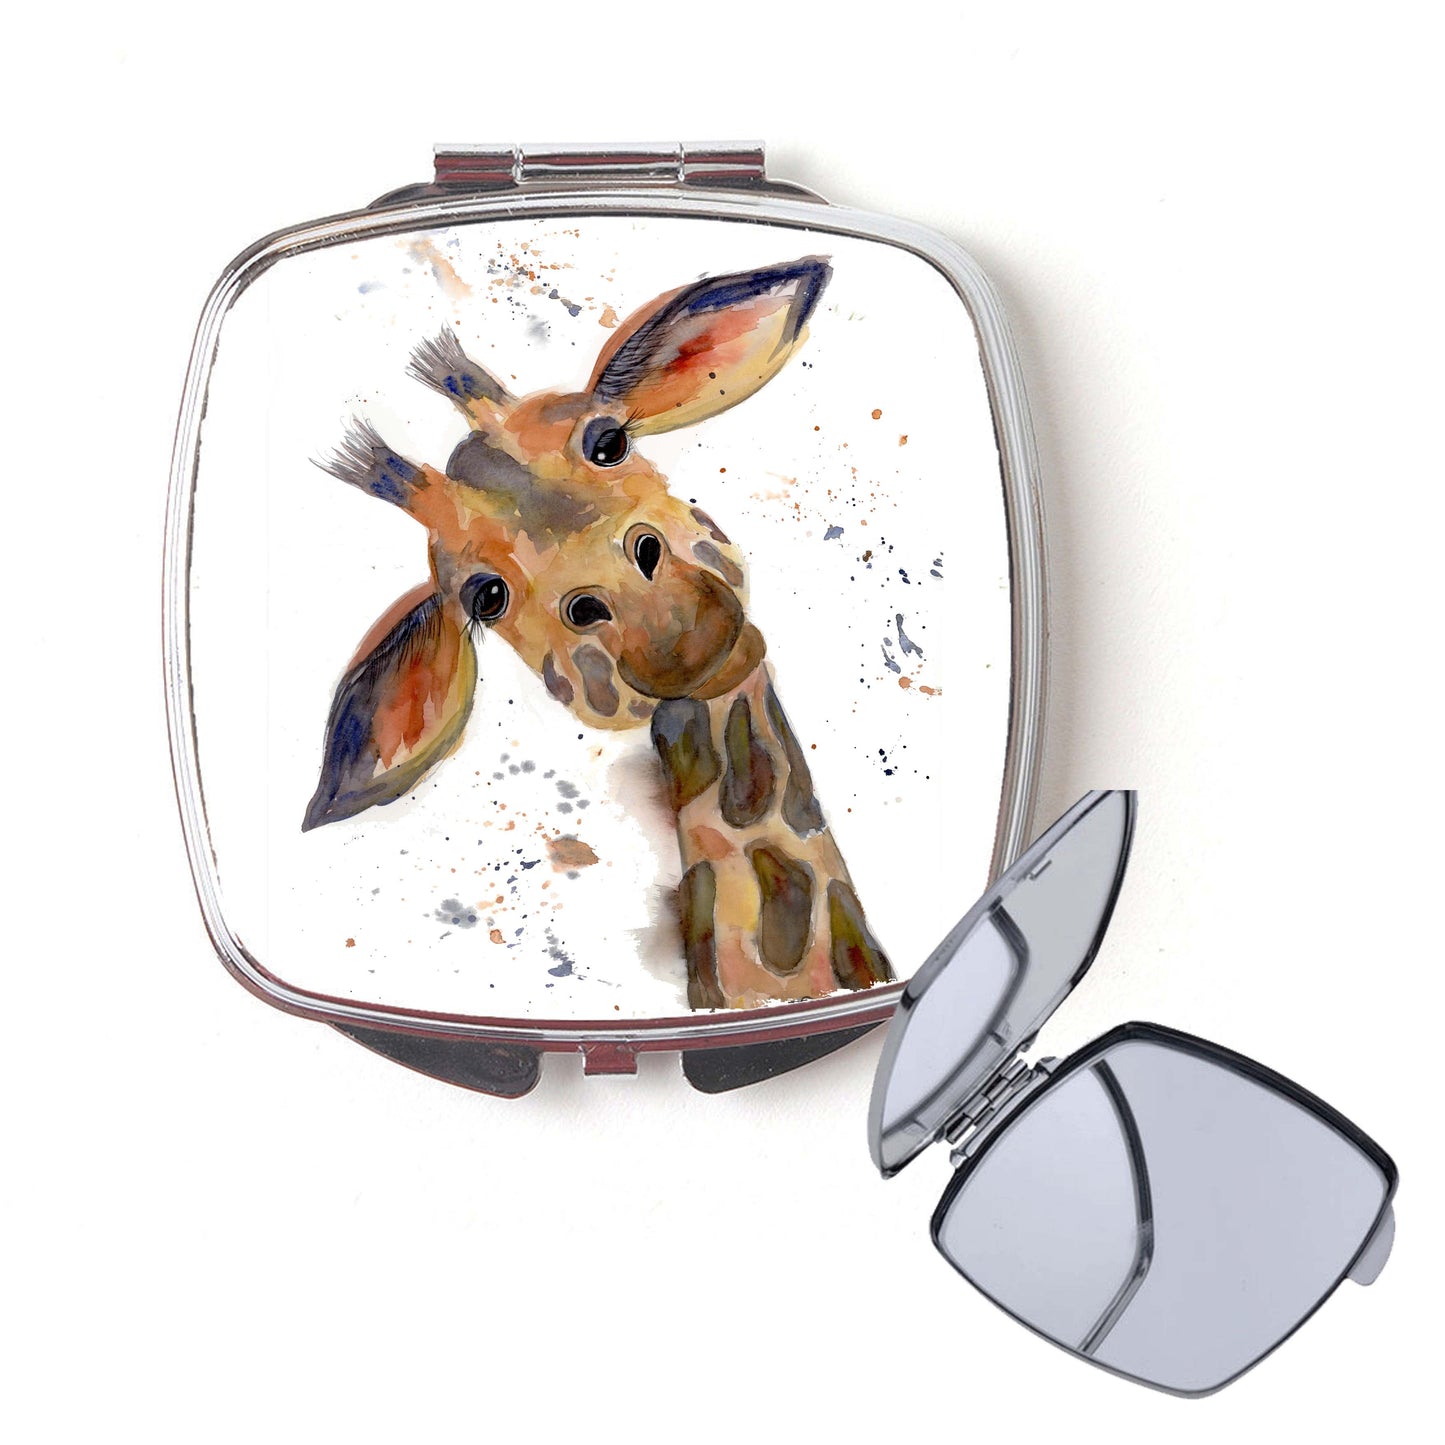 Dotty giraffe compact mirror